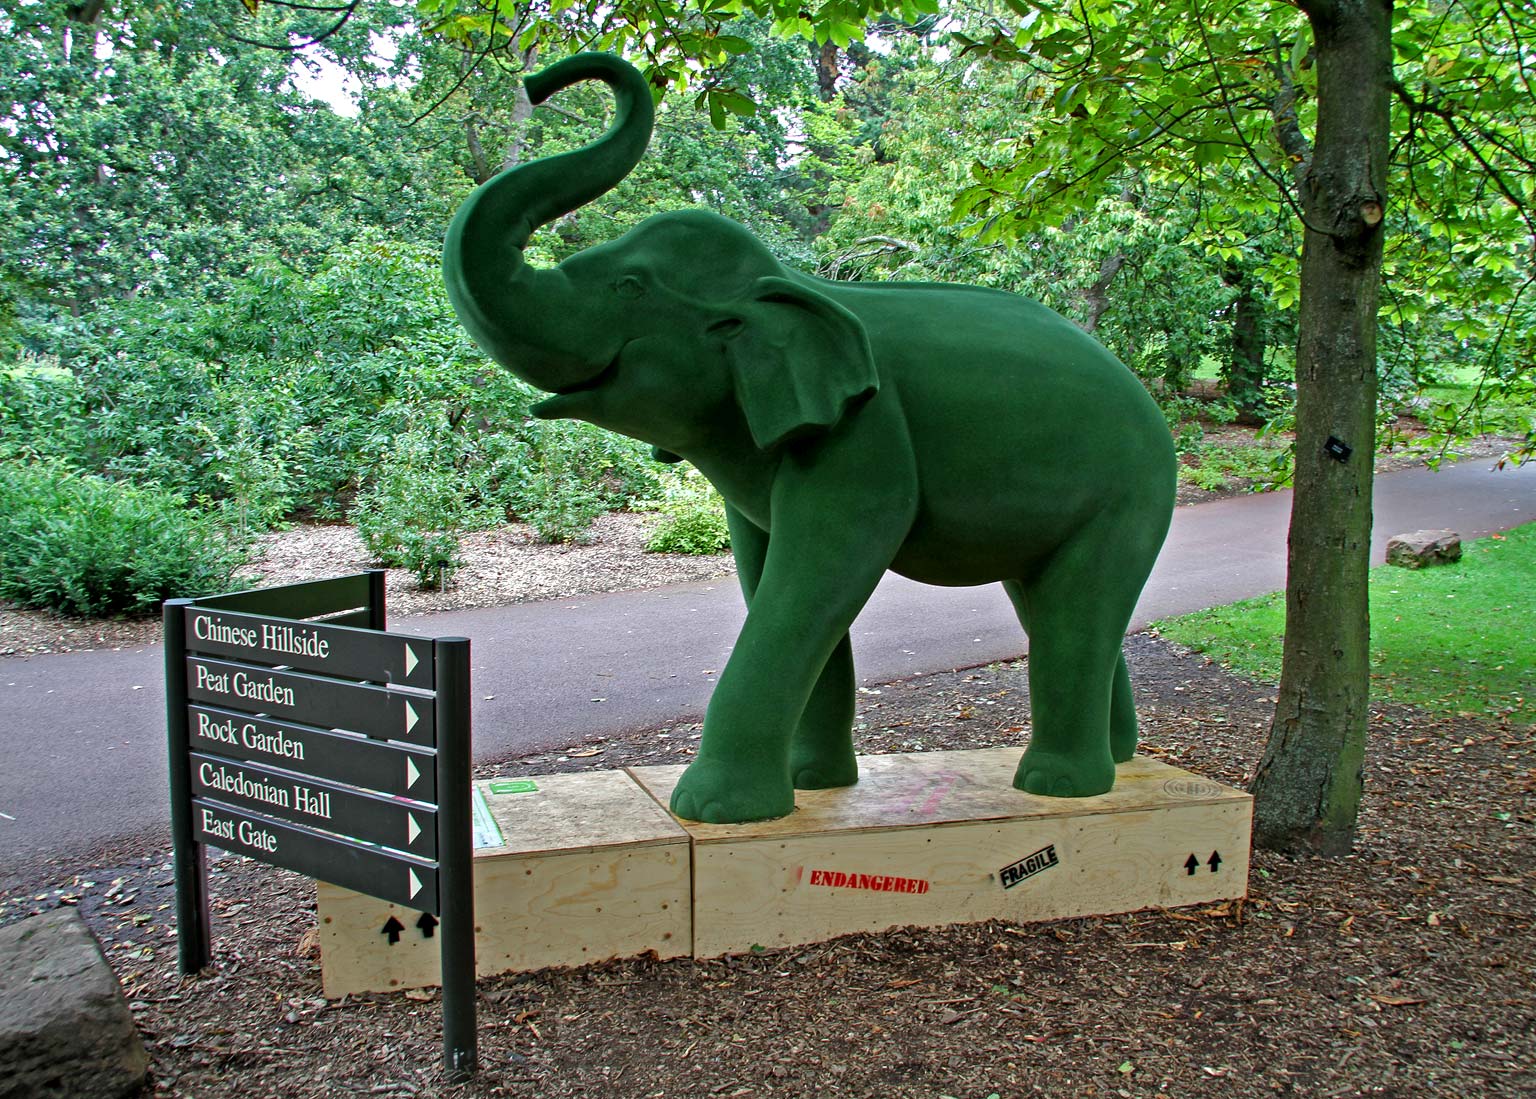 Jungle City Exhibition at Royal Botanic Garden, Edinburgh  -  August 2011